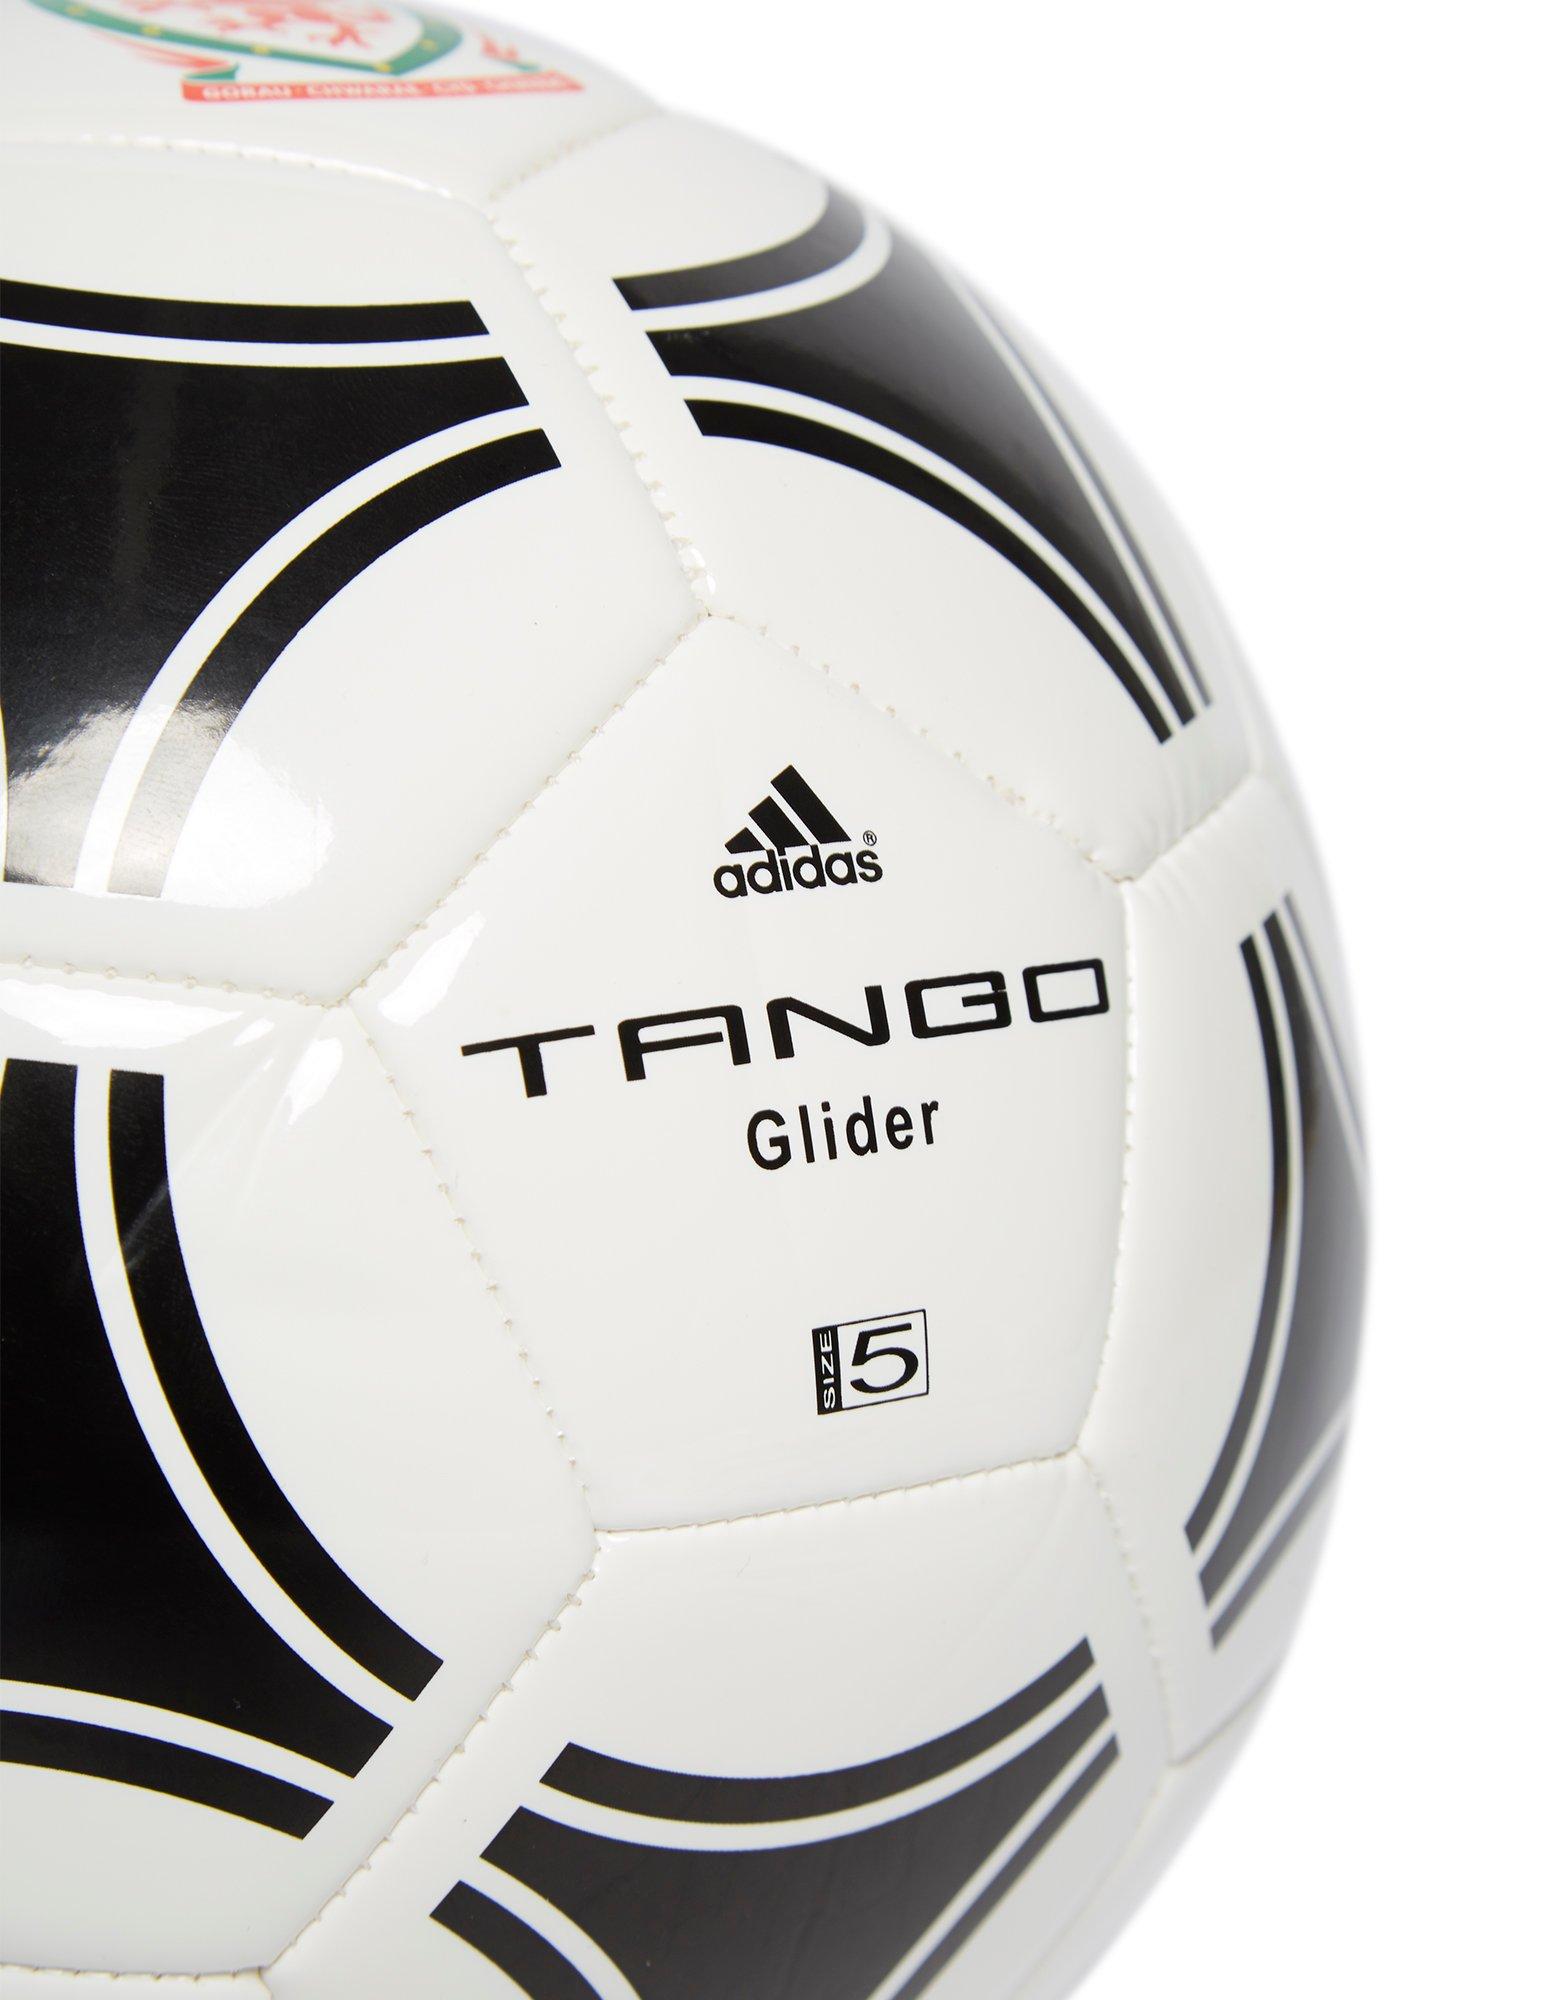 tango glider soccer ball